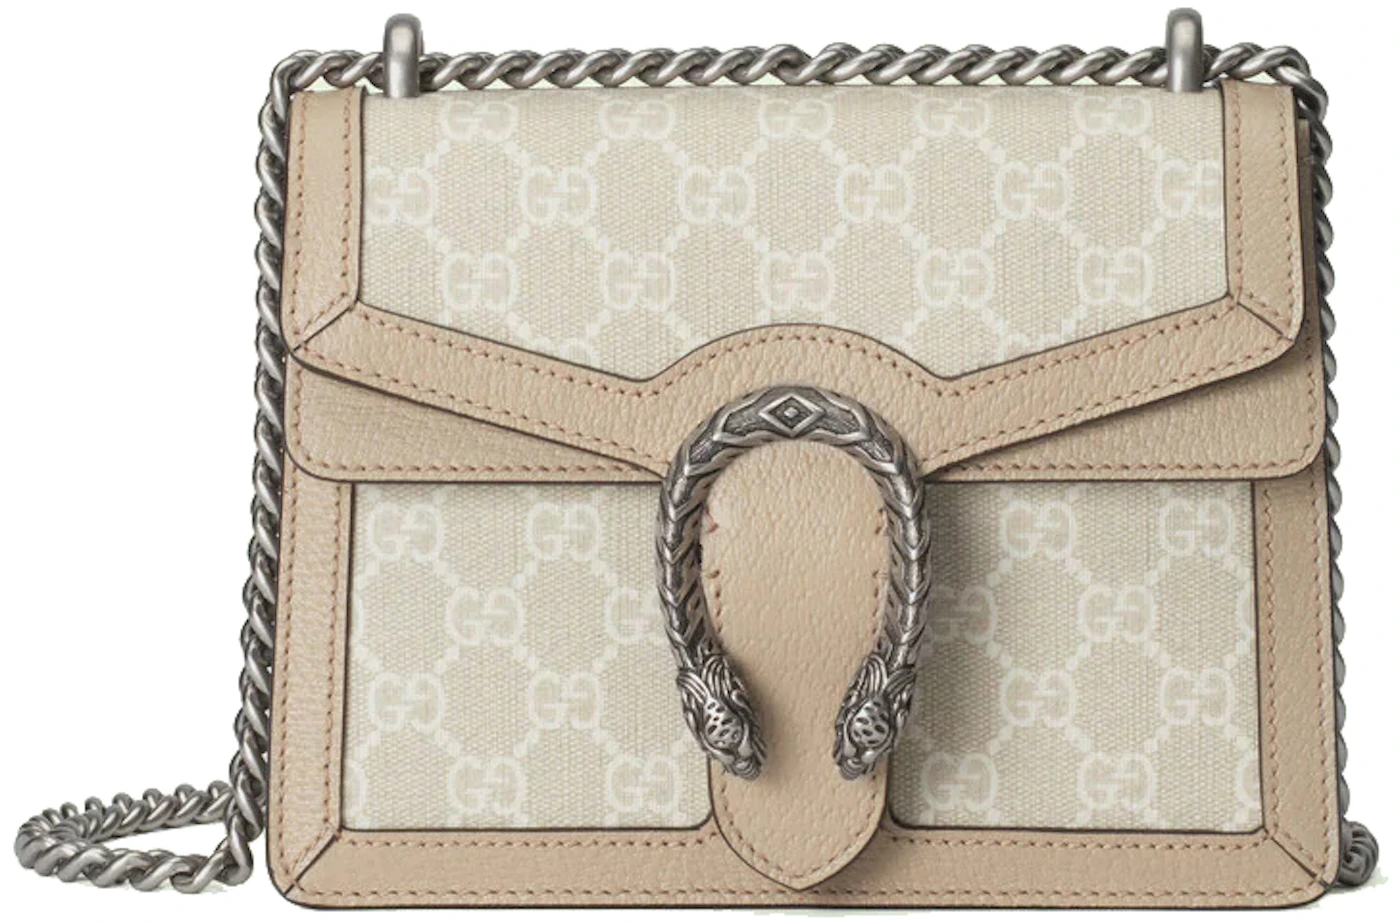 Gucci Dionysus GG Small Rectangular Bag, White, GG Canvas